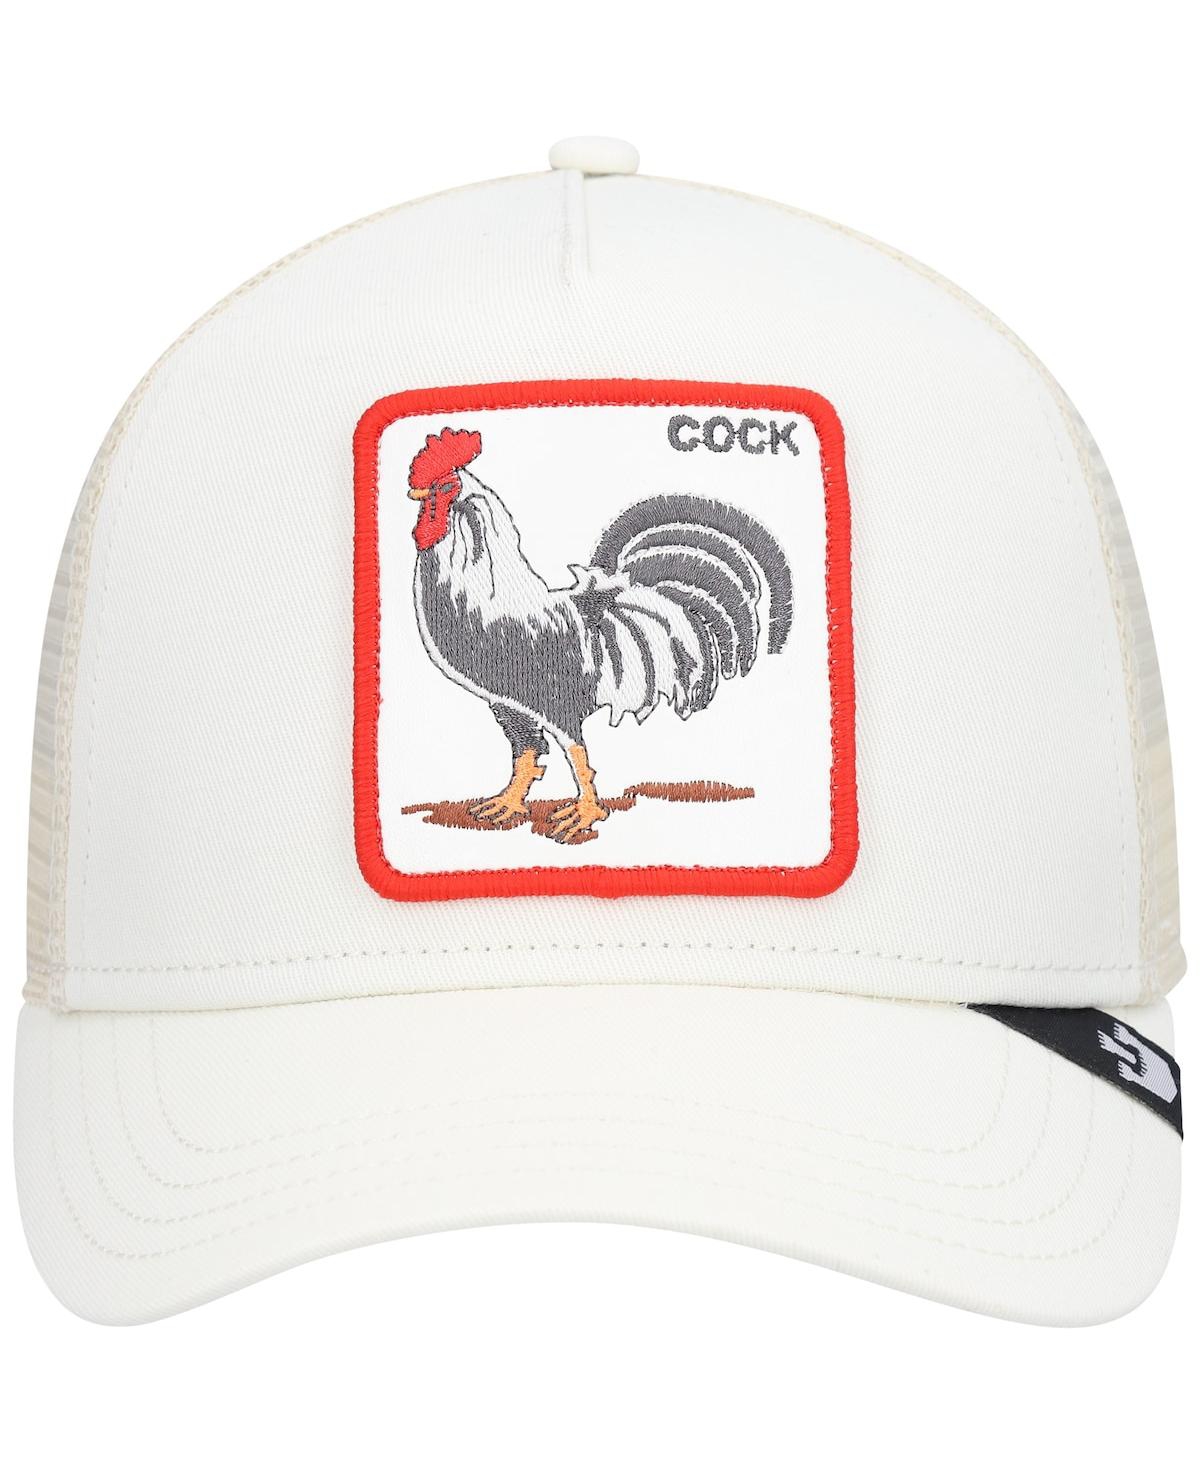 Shop Goorin Bros Men's . White The Rooster Trucker Snapback Hat